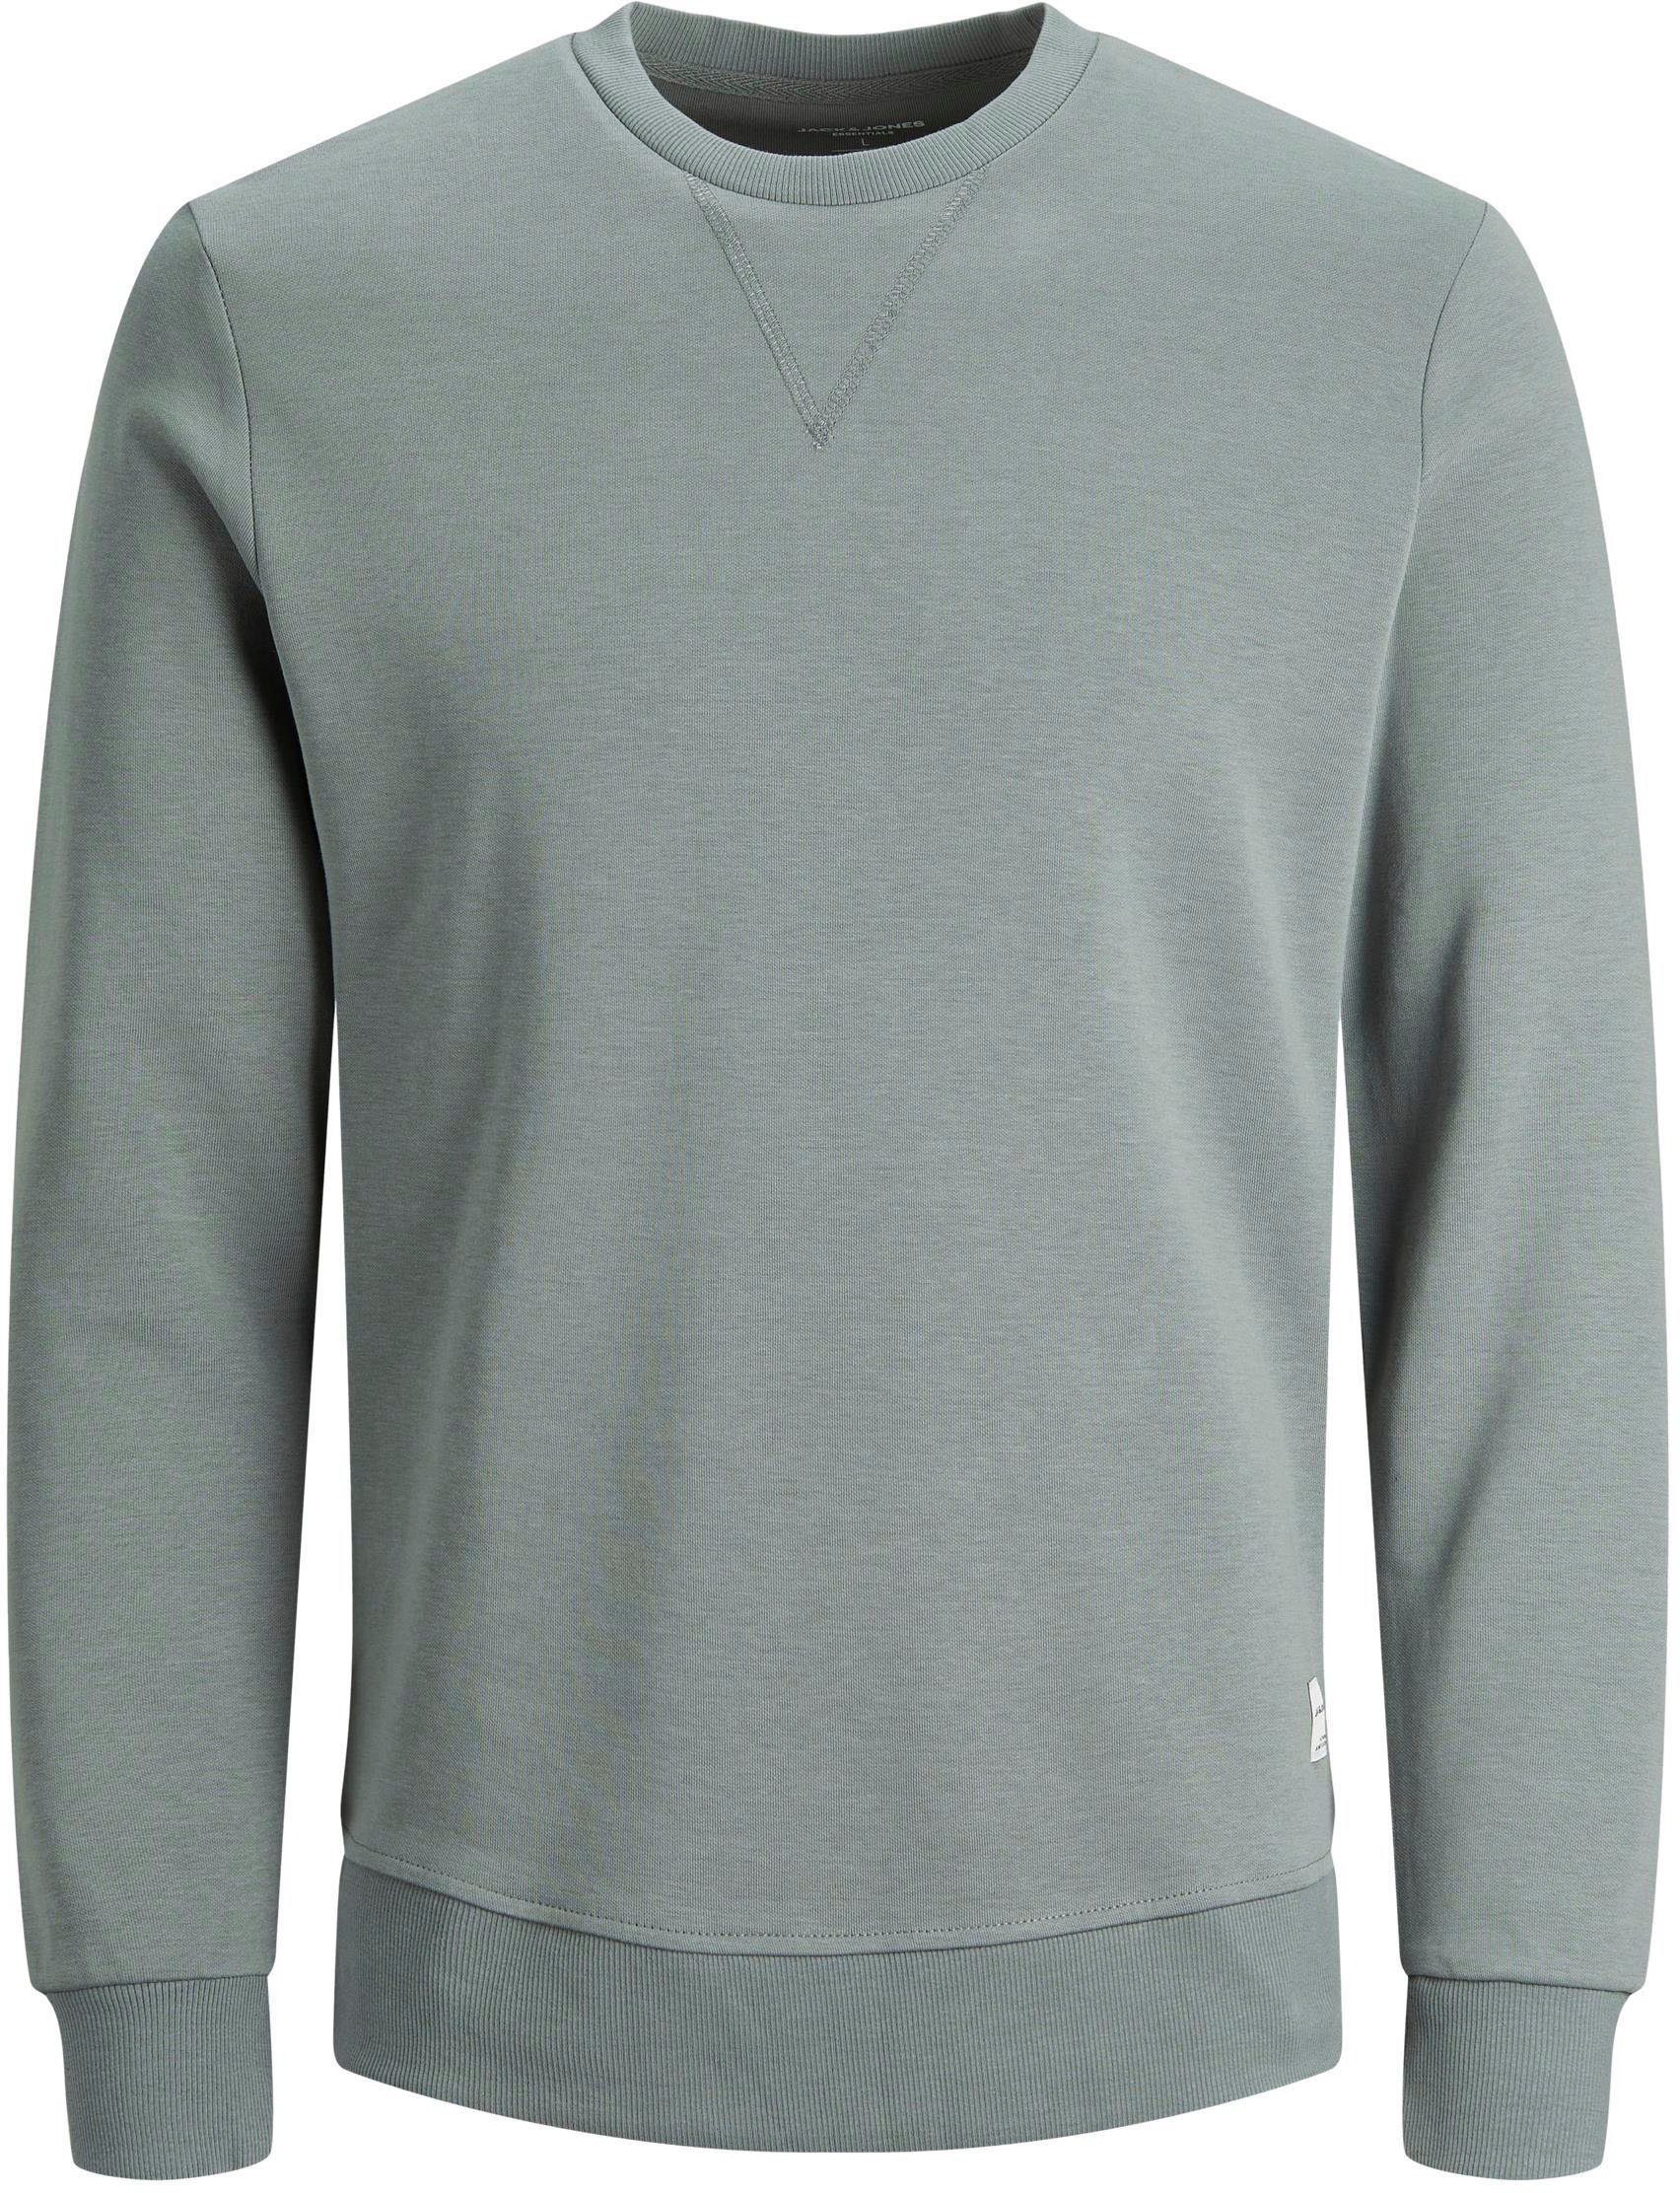 Jack & Jones BASIC SWEAT Sweatshirt graugrün